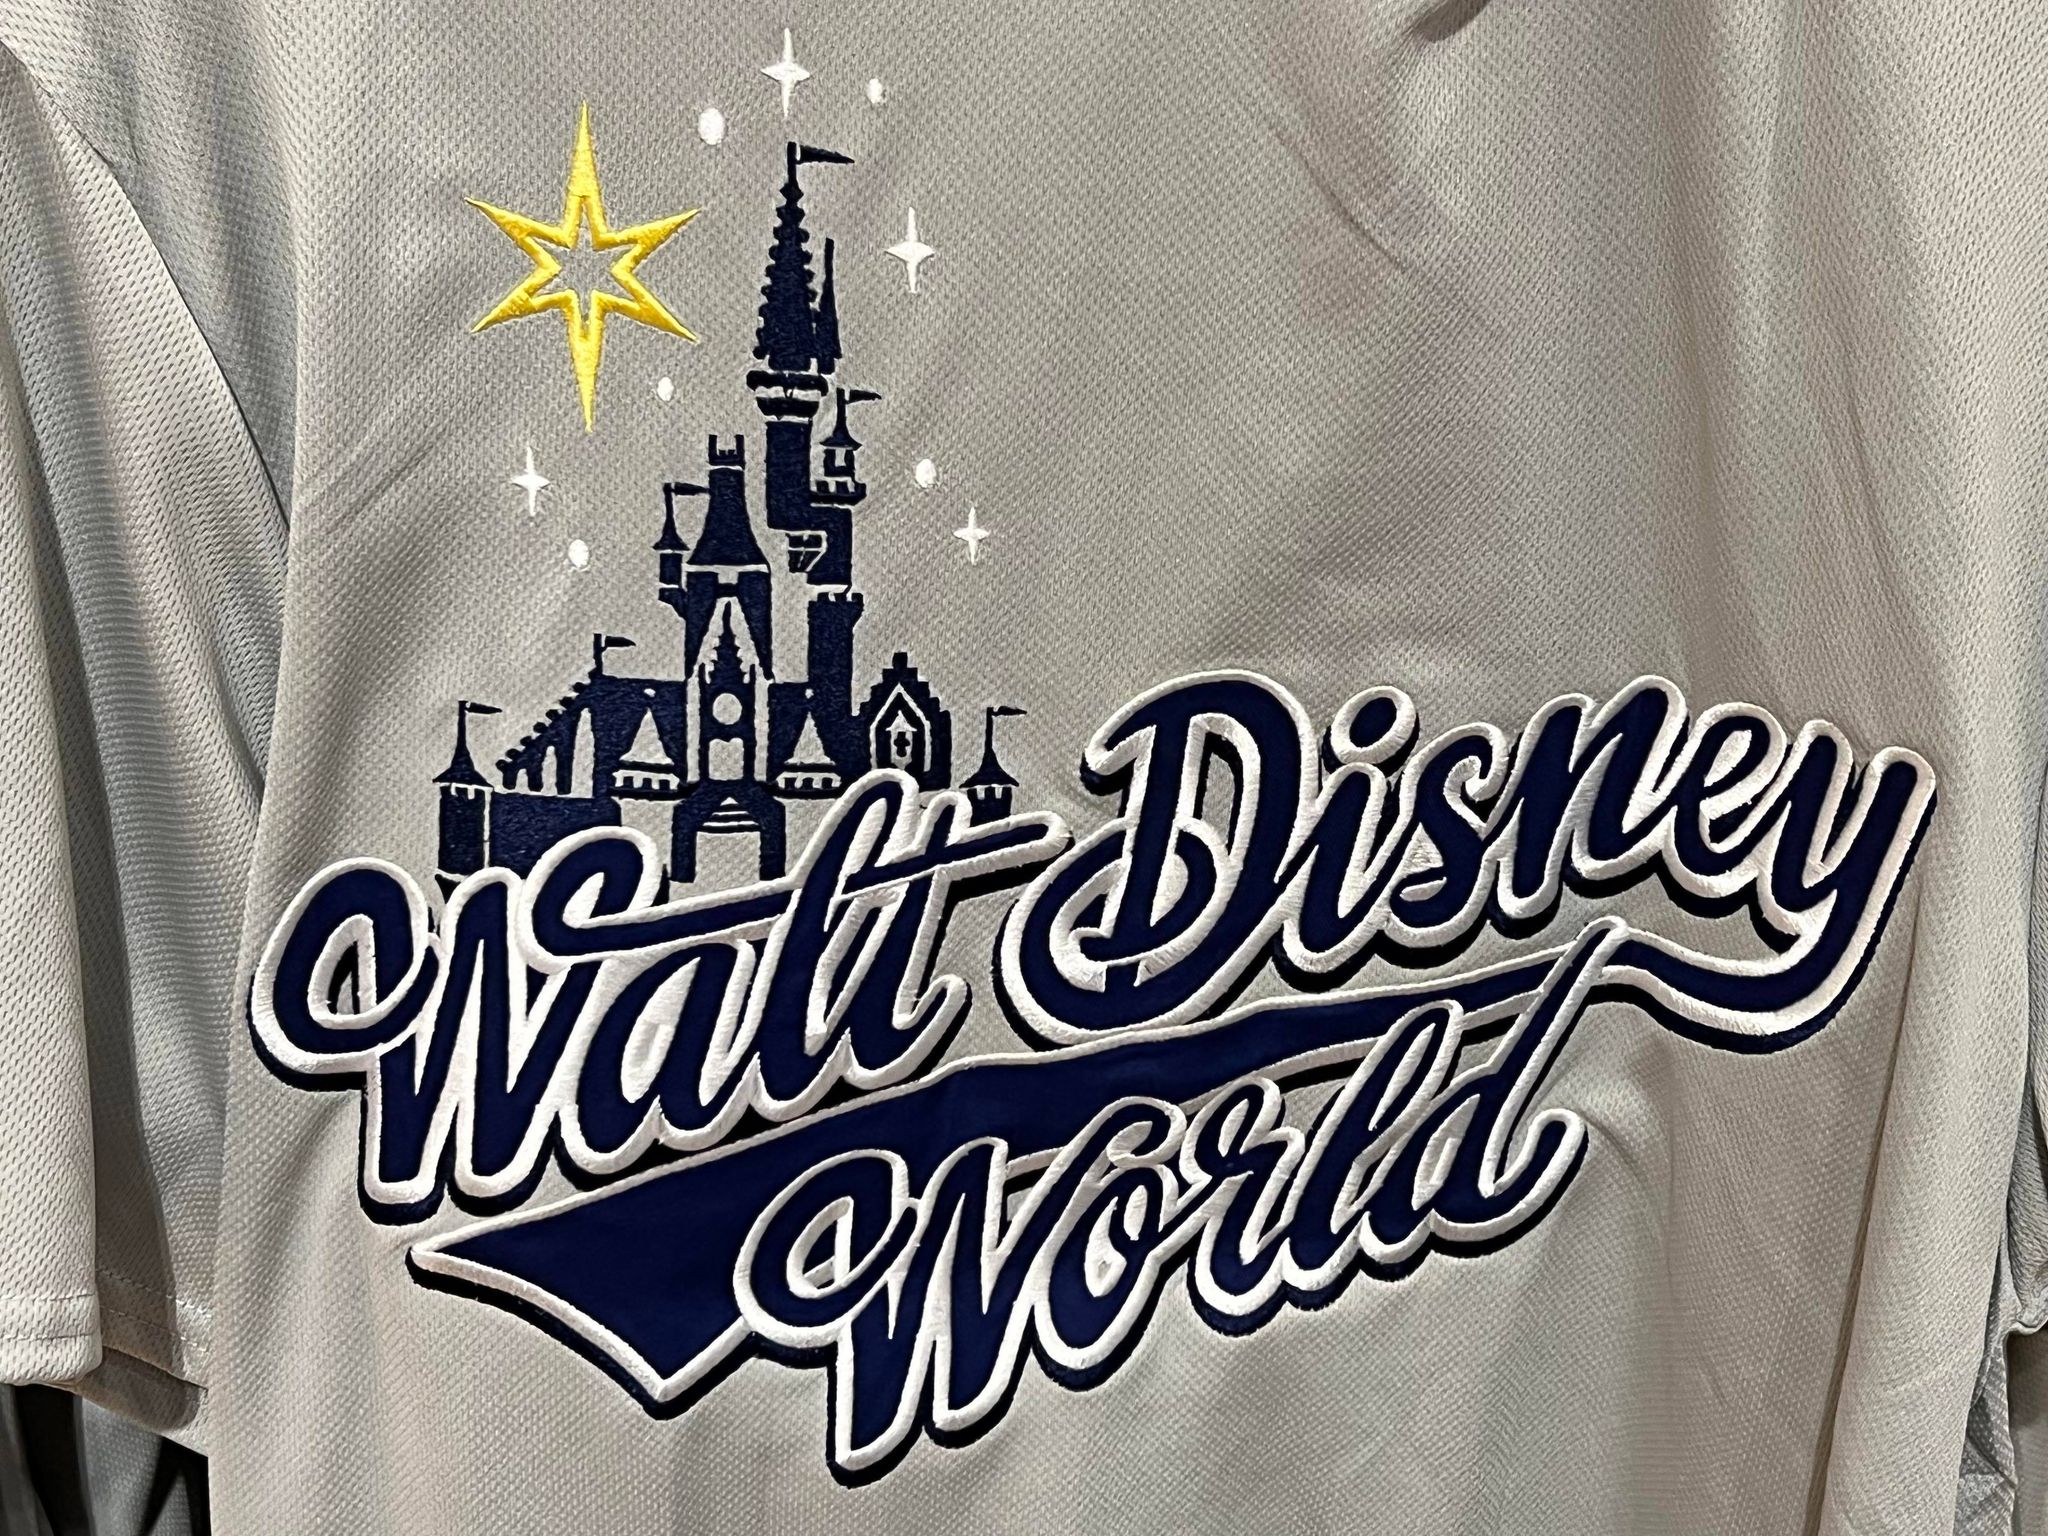 WDW News Today on X: “Walt Disney World” baseball style jersey at